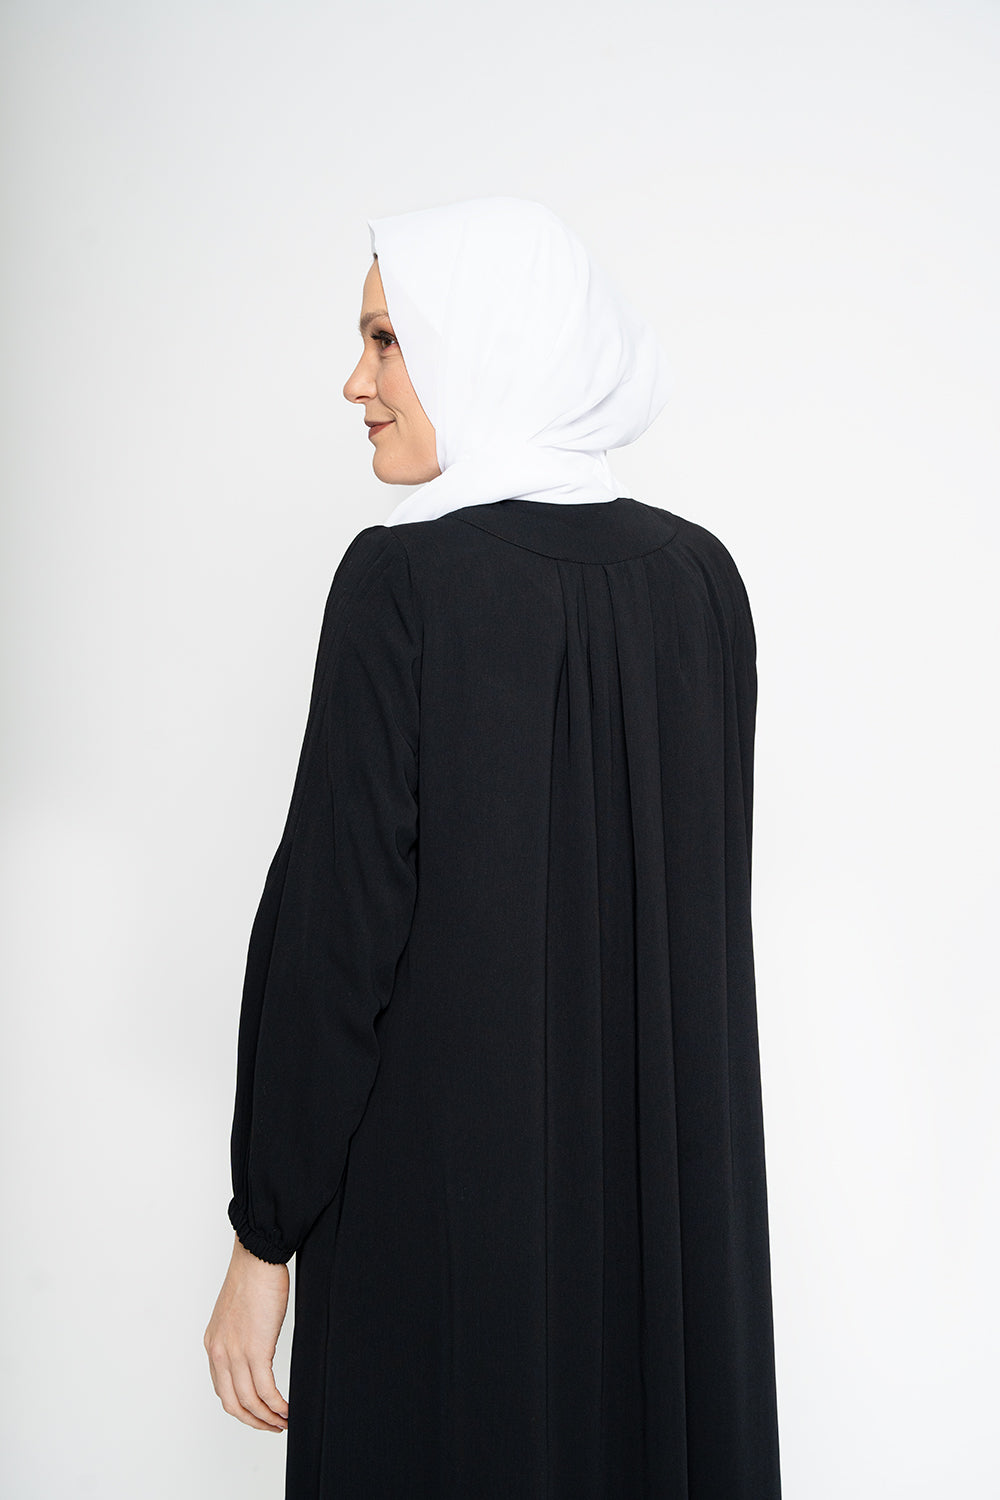 Diamond Modest Black Abaya | Dana Fashion